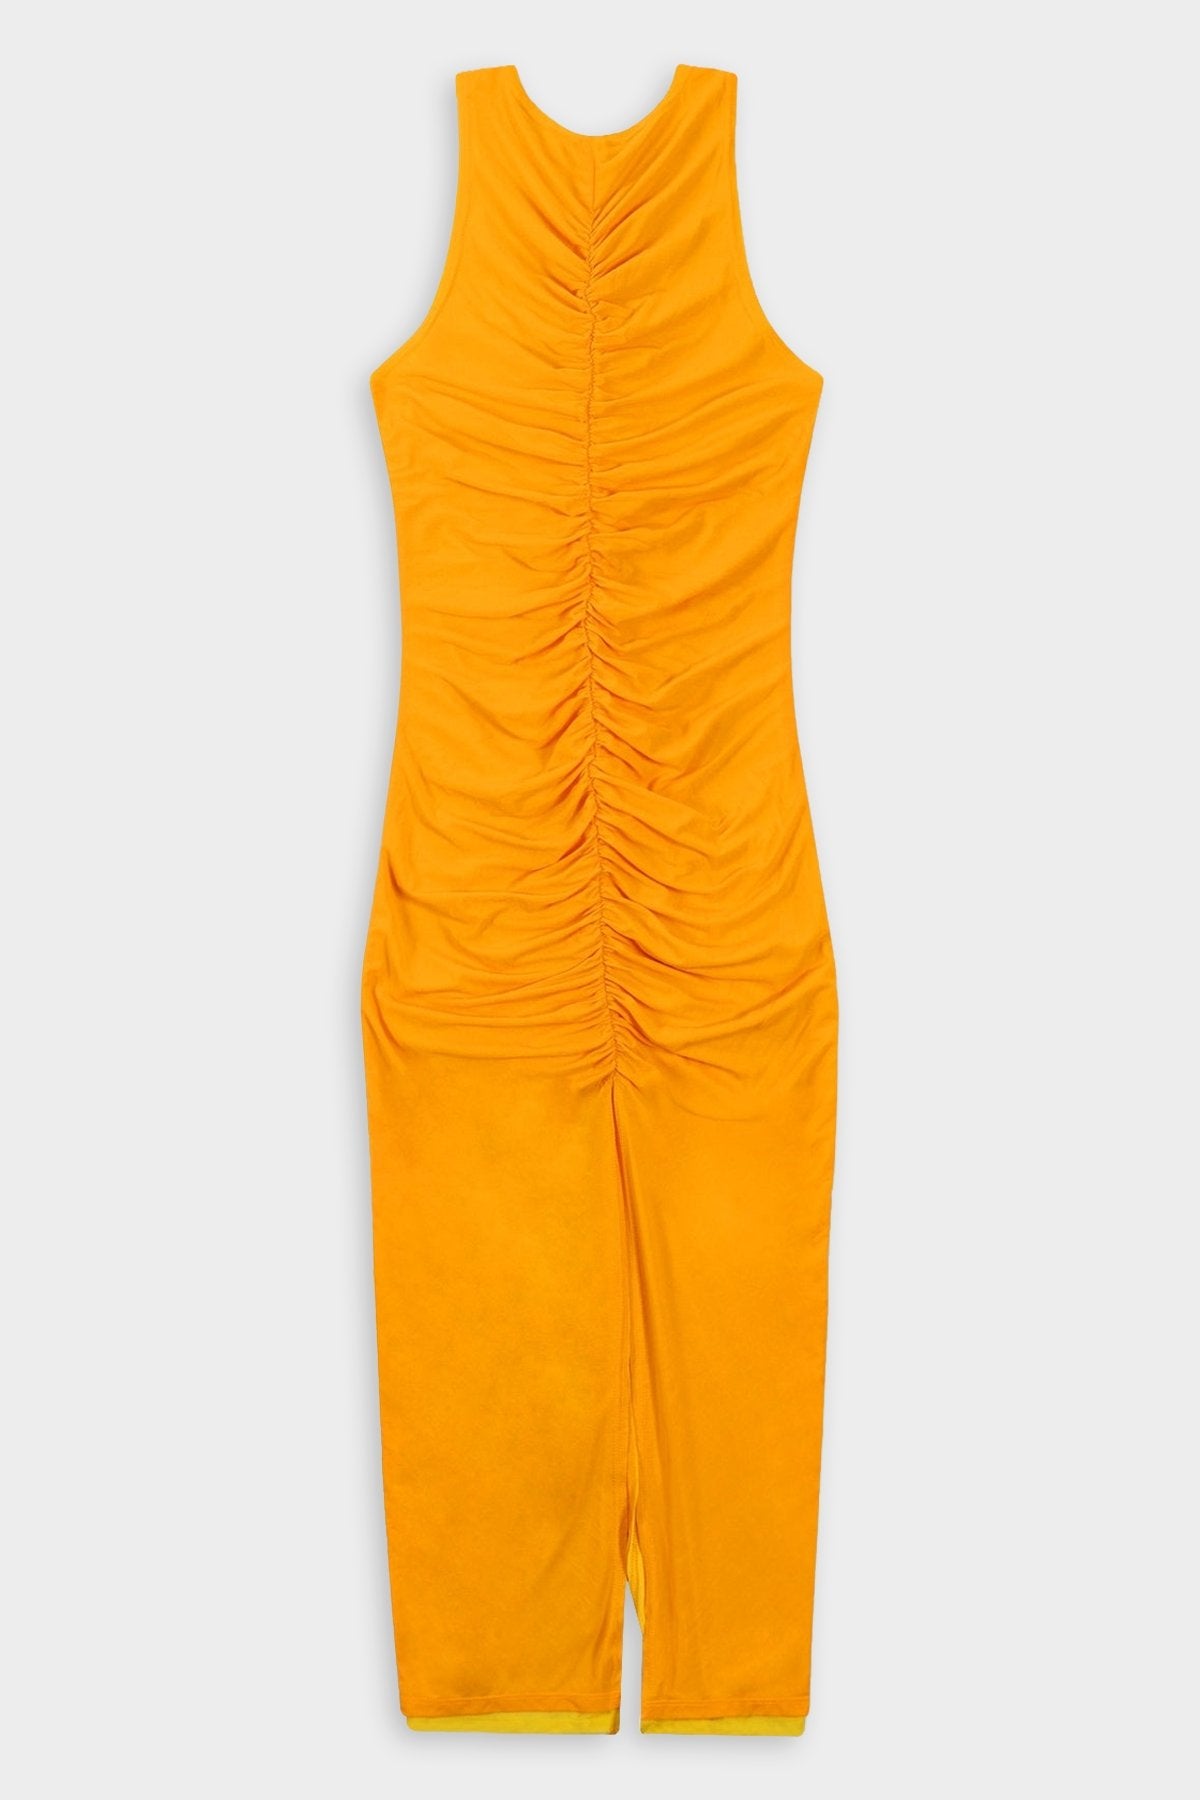 Mesh Zeet Dress in Sunset Orange - shop-olivia.com